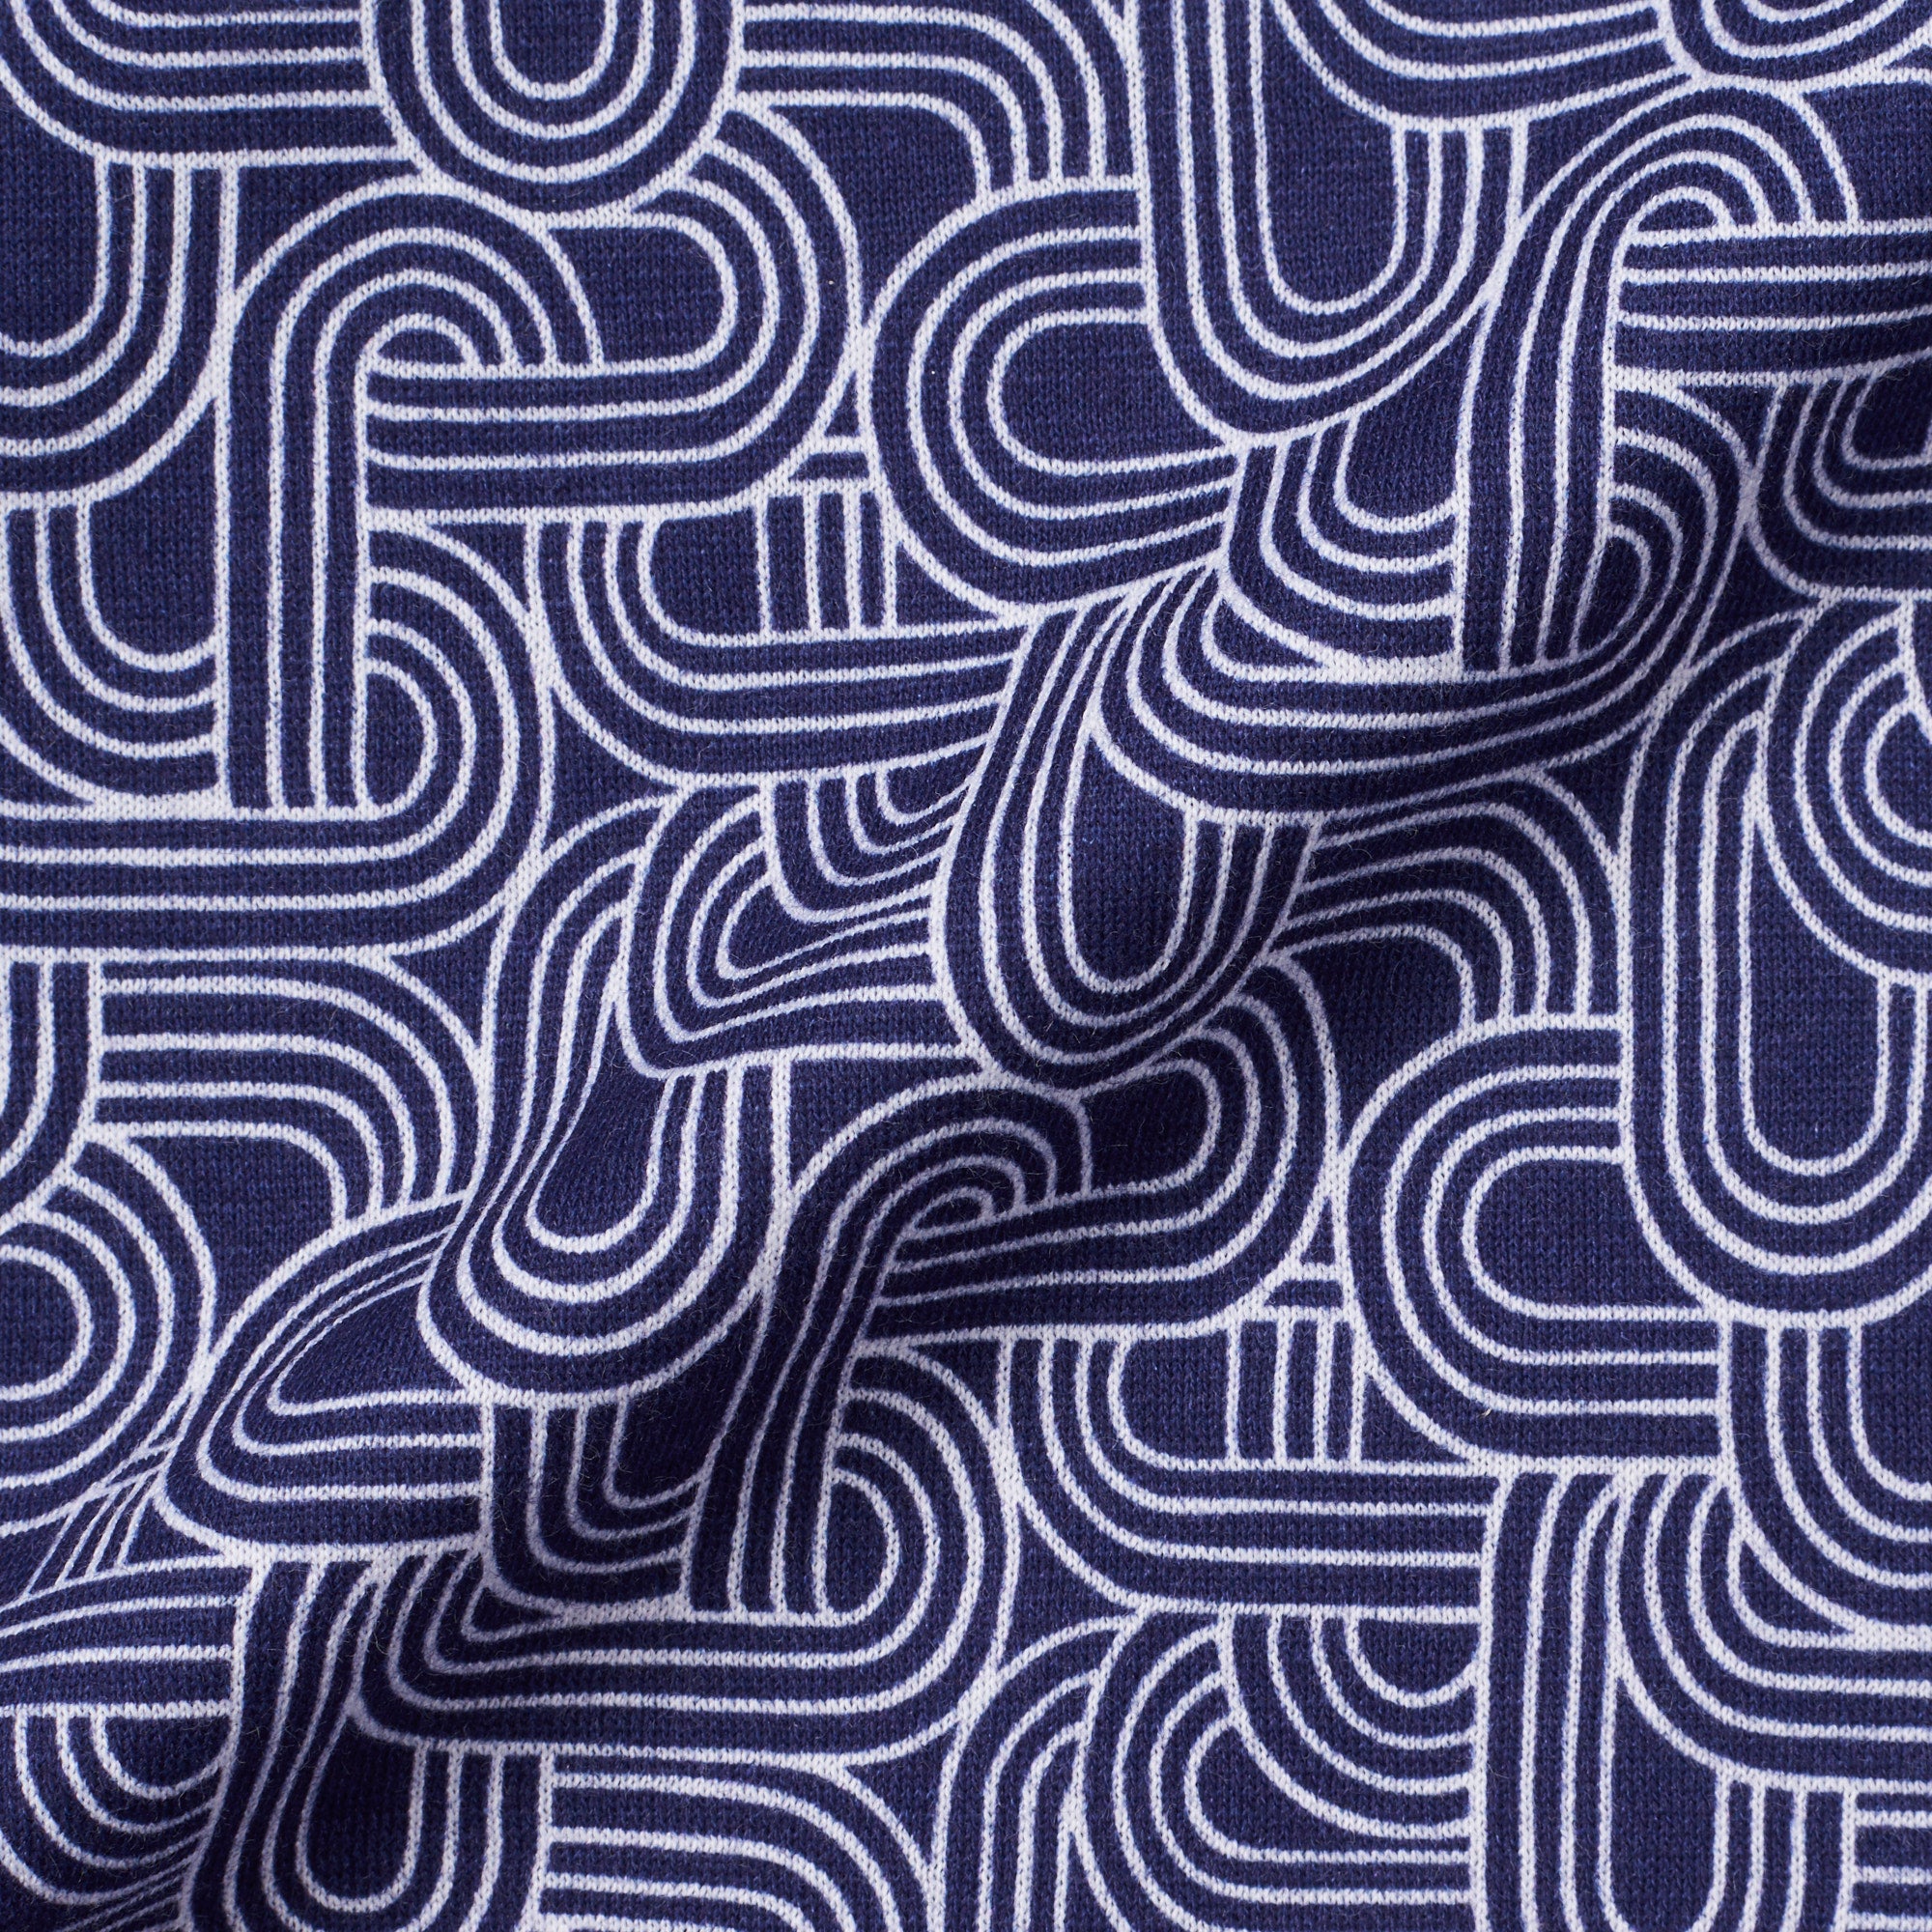 SARTORIO Napoli by KITON Navy Blue Geometric Cotton Short Sleeve Casual Shirt NEW